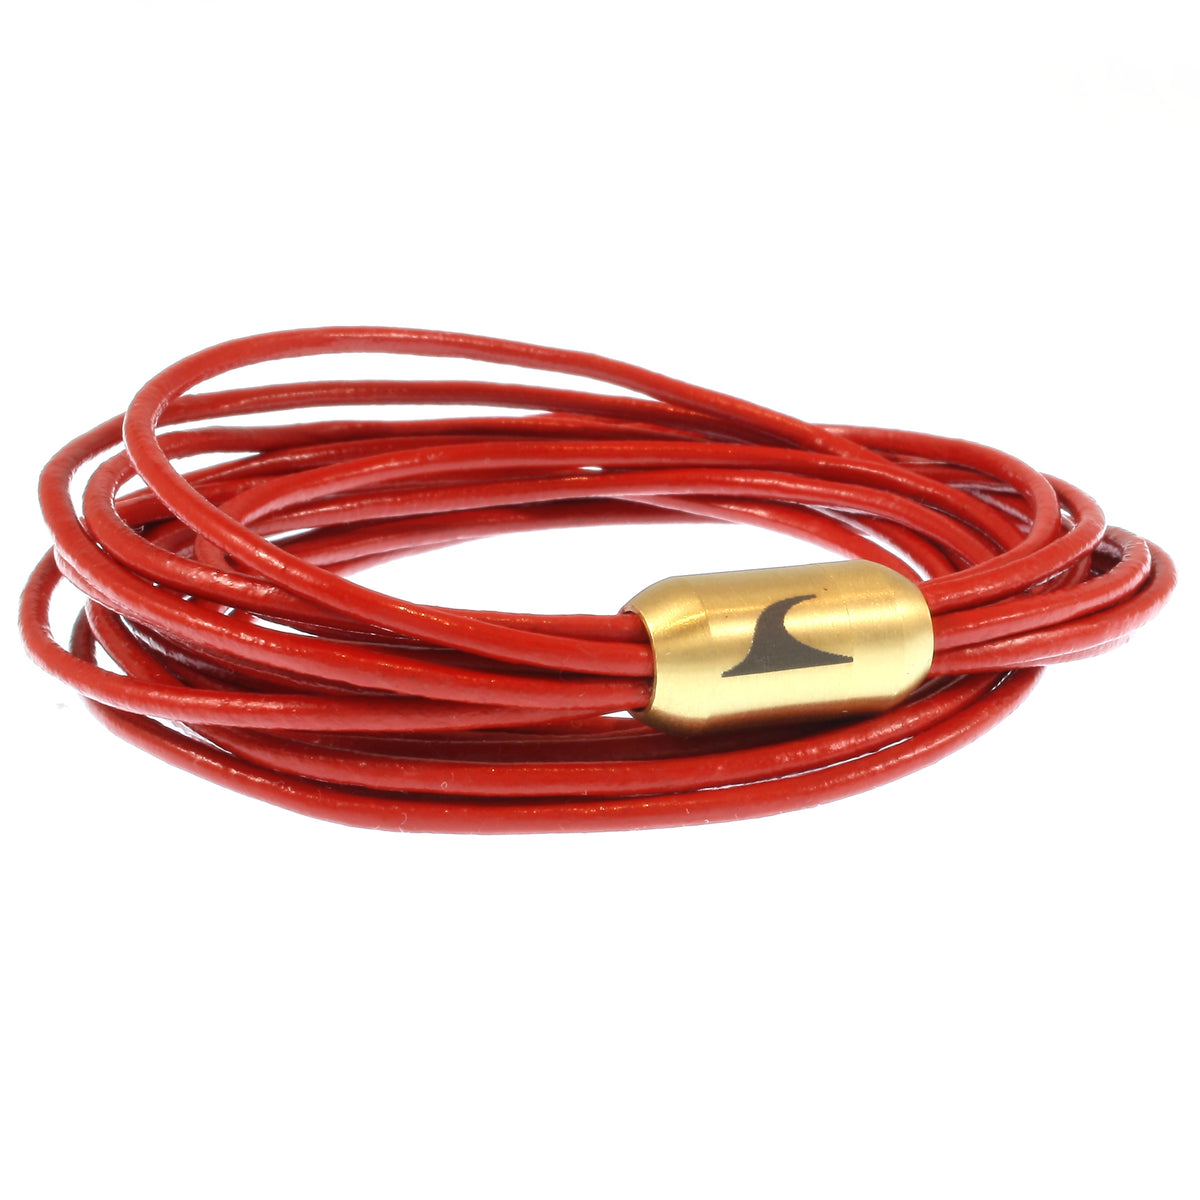 Damen-Leder-armband-fem2-rot-gold-Edelstahlverschluss-vorn-wavepirate-shop-r